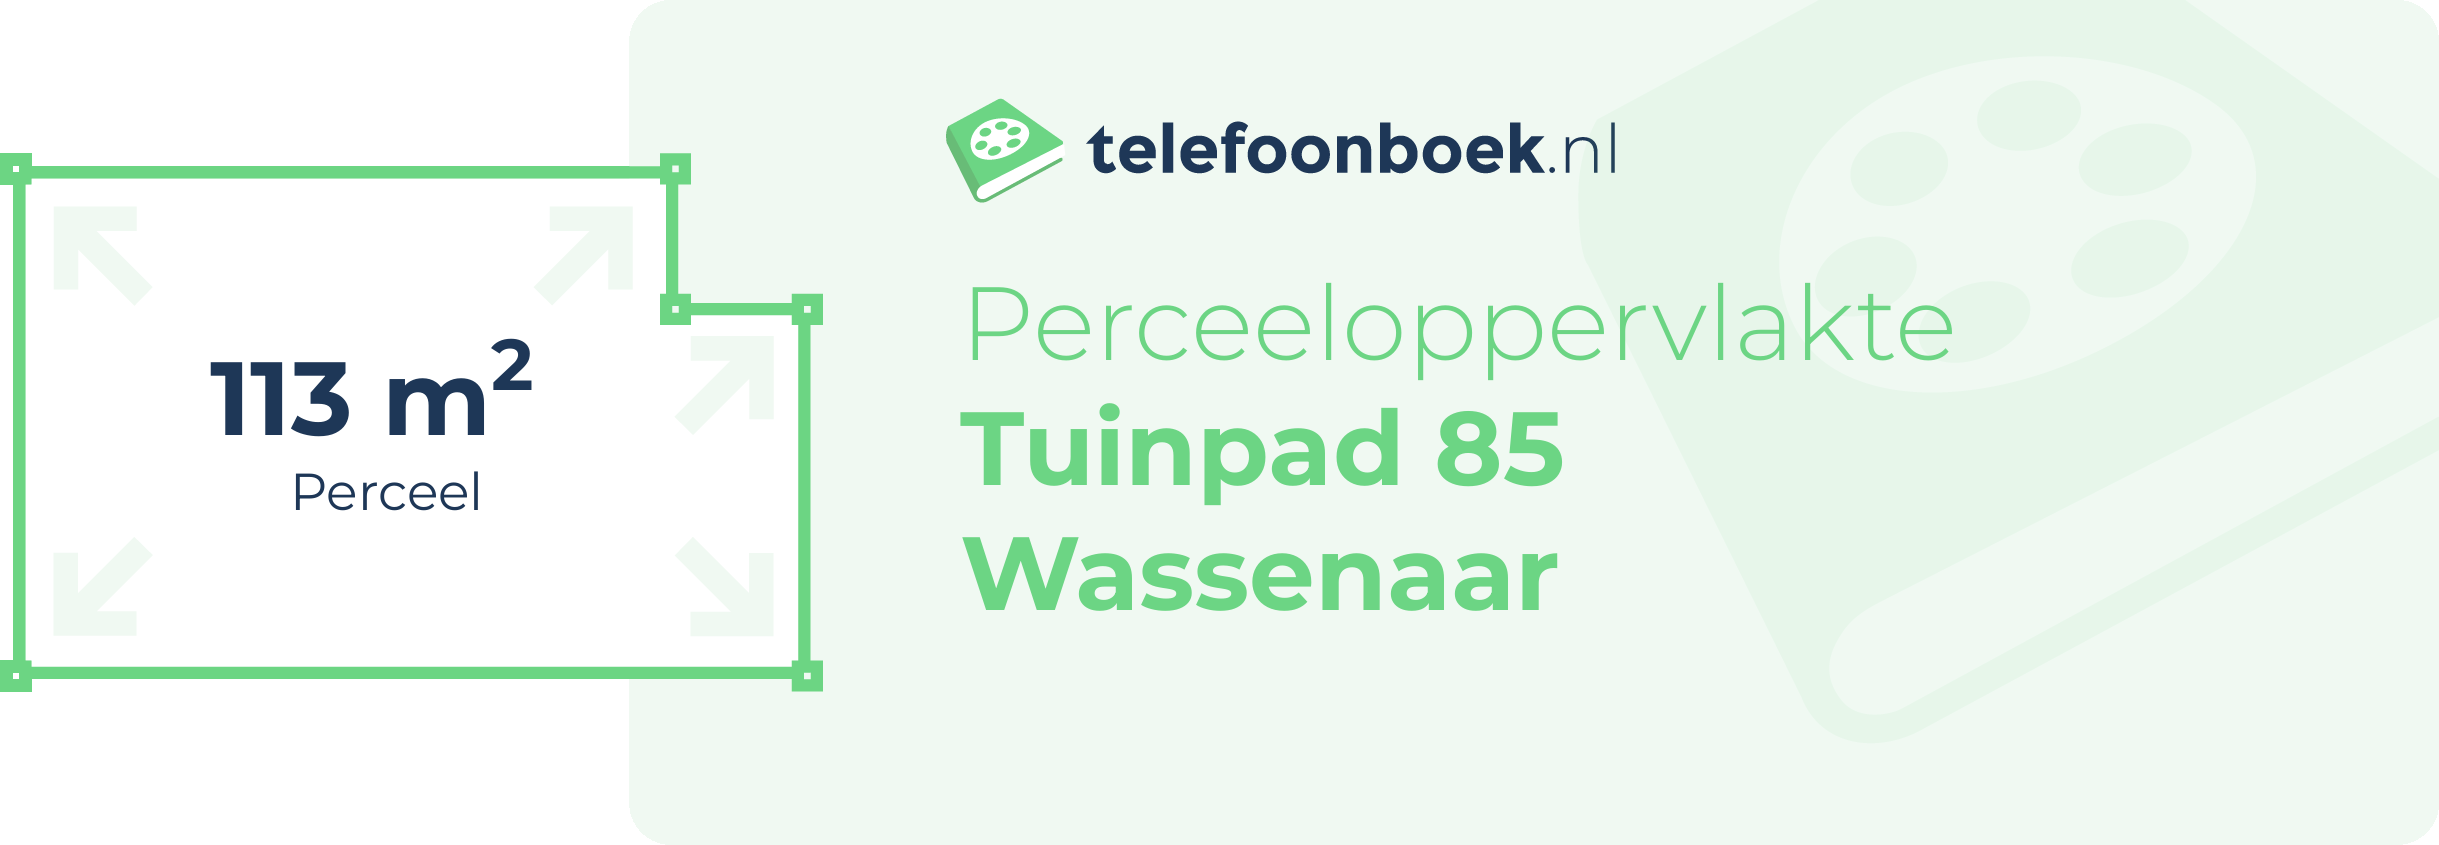 Perceeloppervlakte Tuinpad 85 Wassenaar